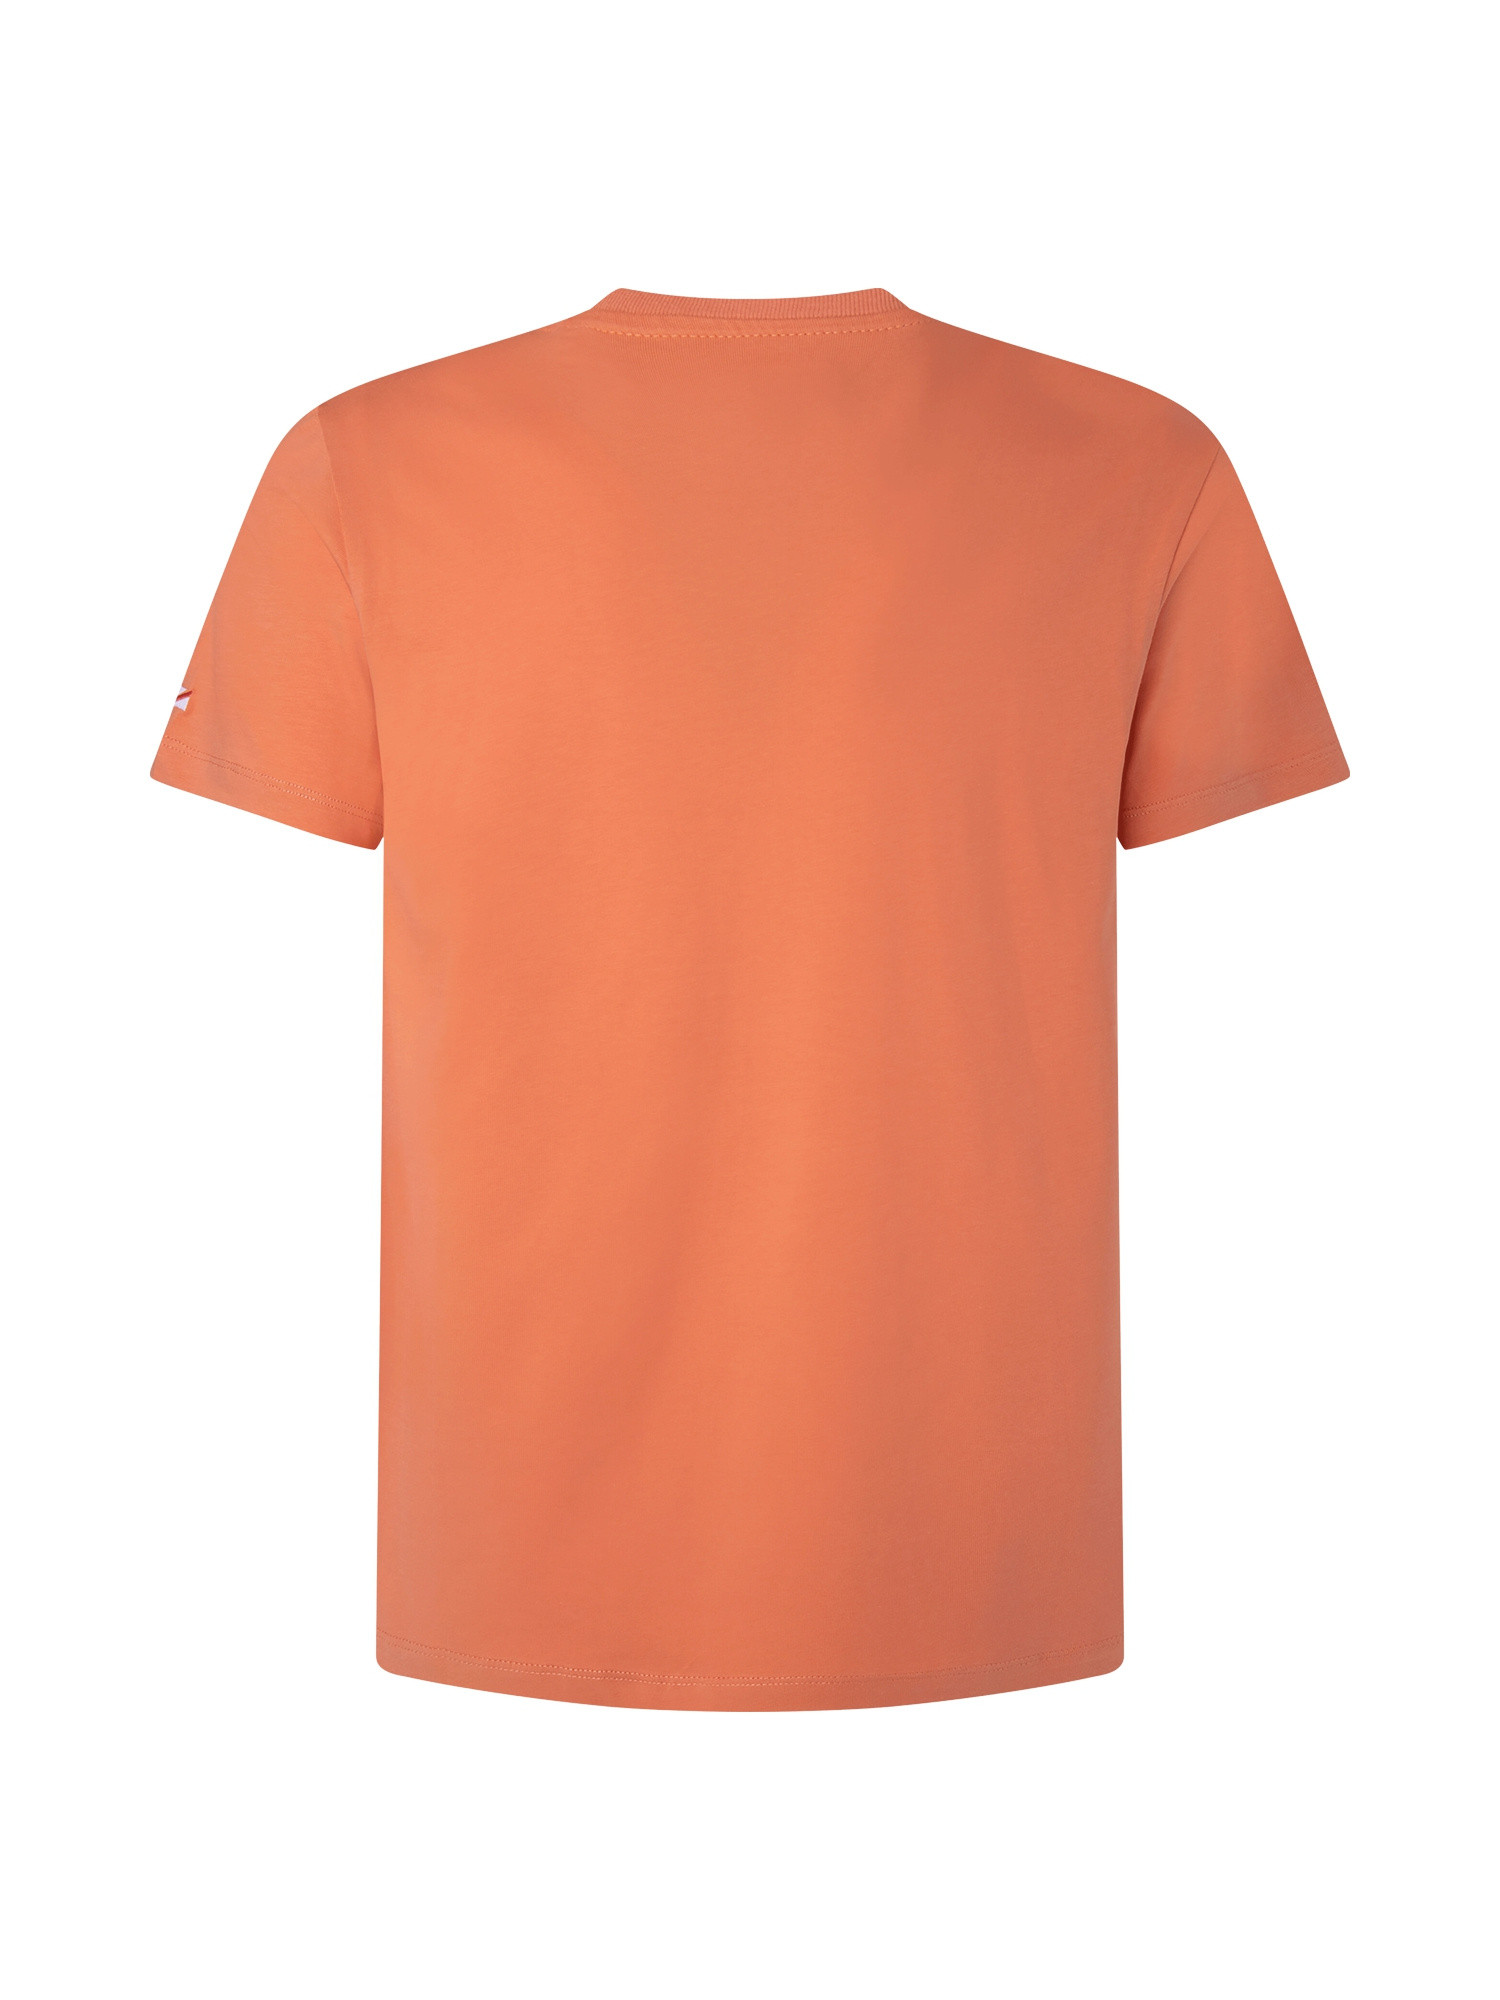 Pepe Jeans - T-shirt con logo ricamato in cotone, Arancione, large image number 1